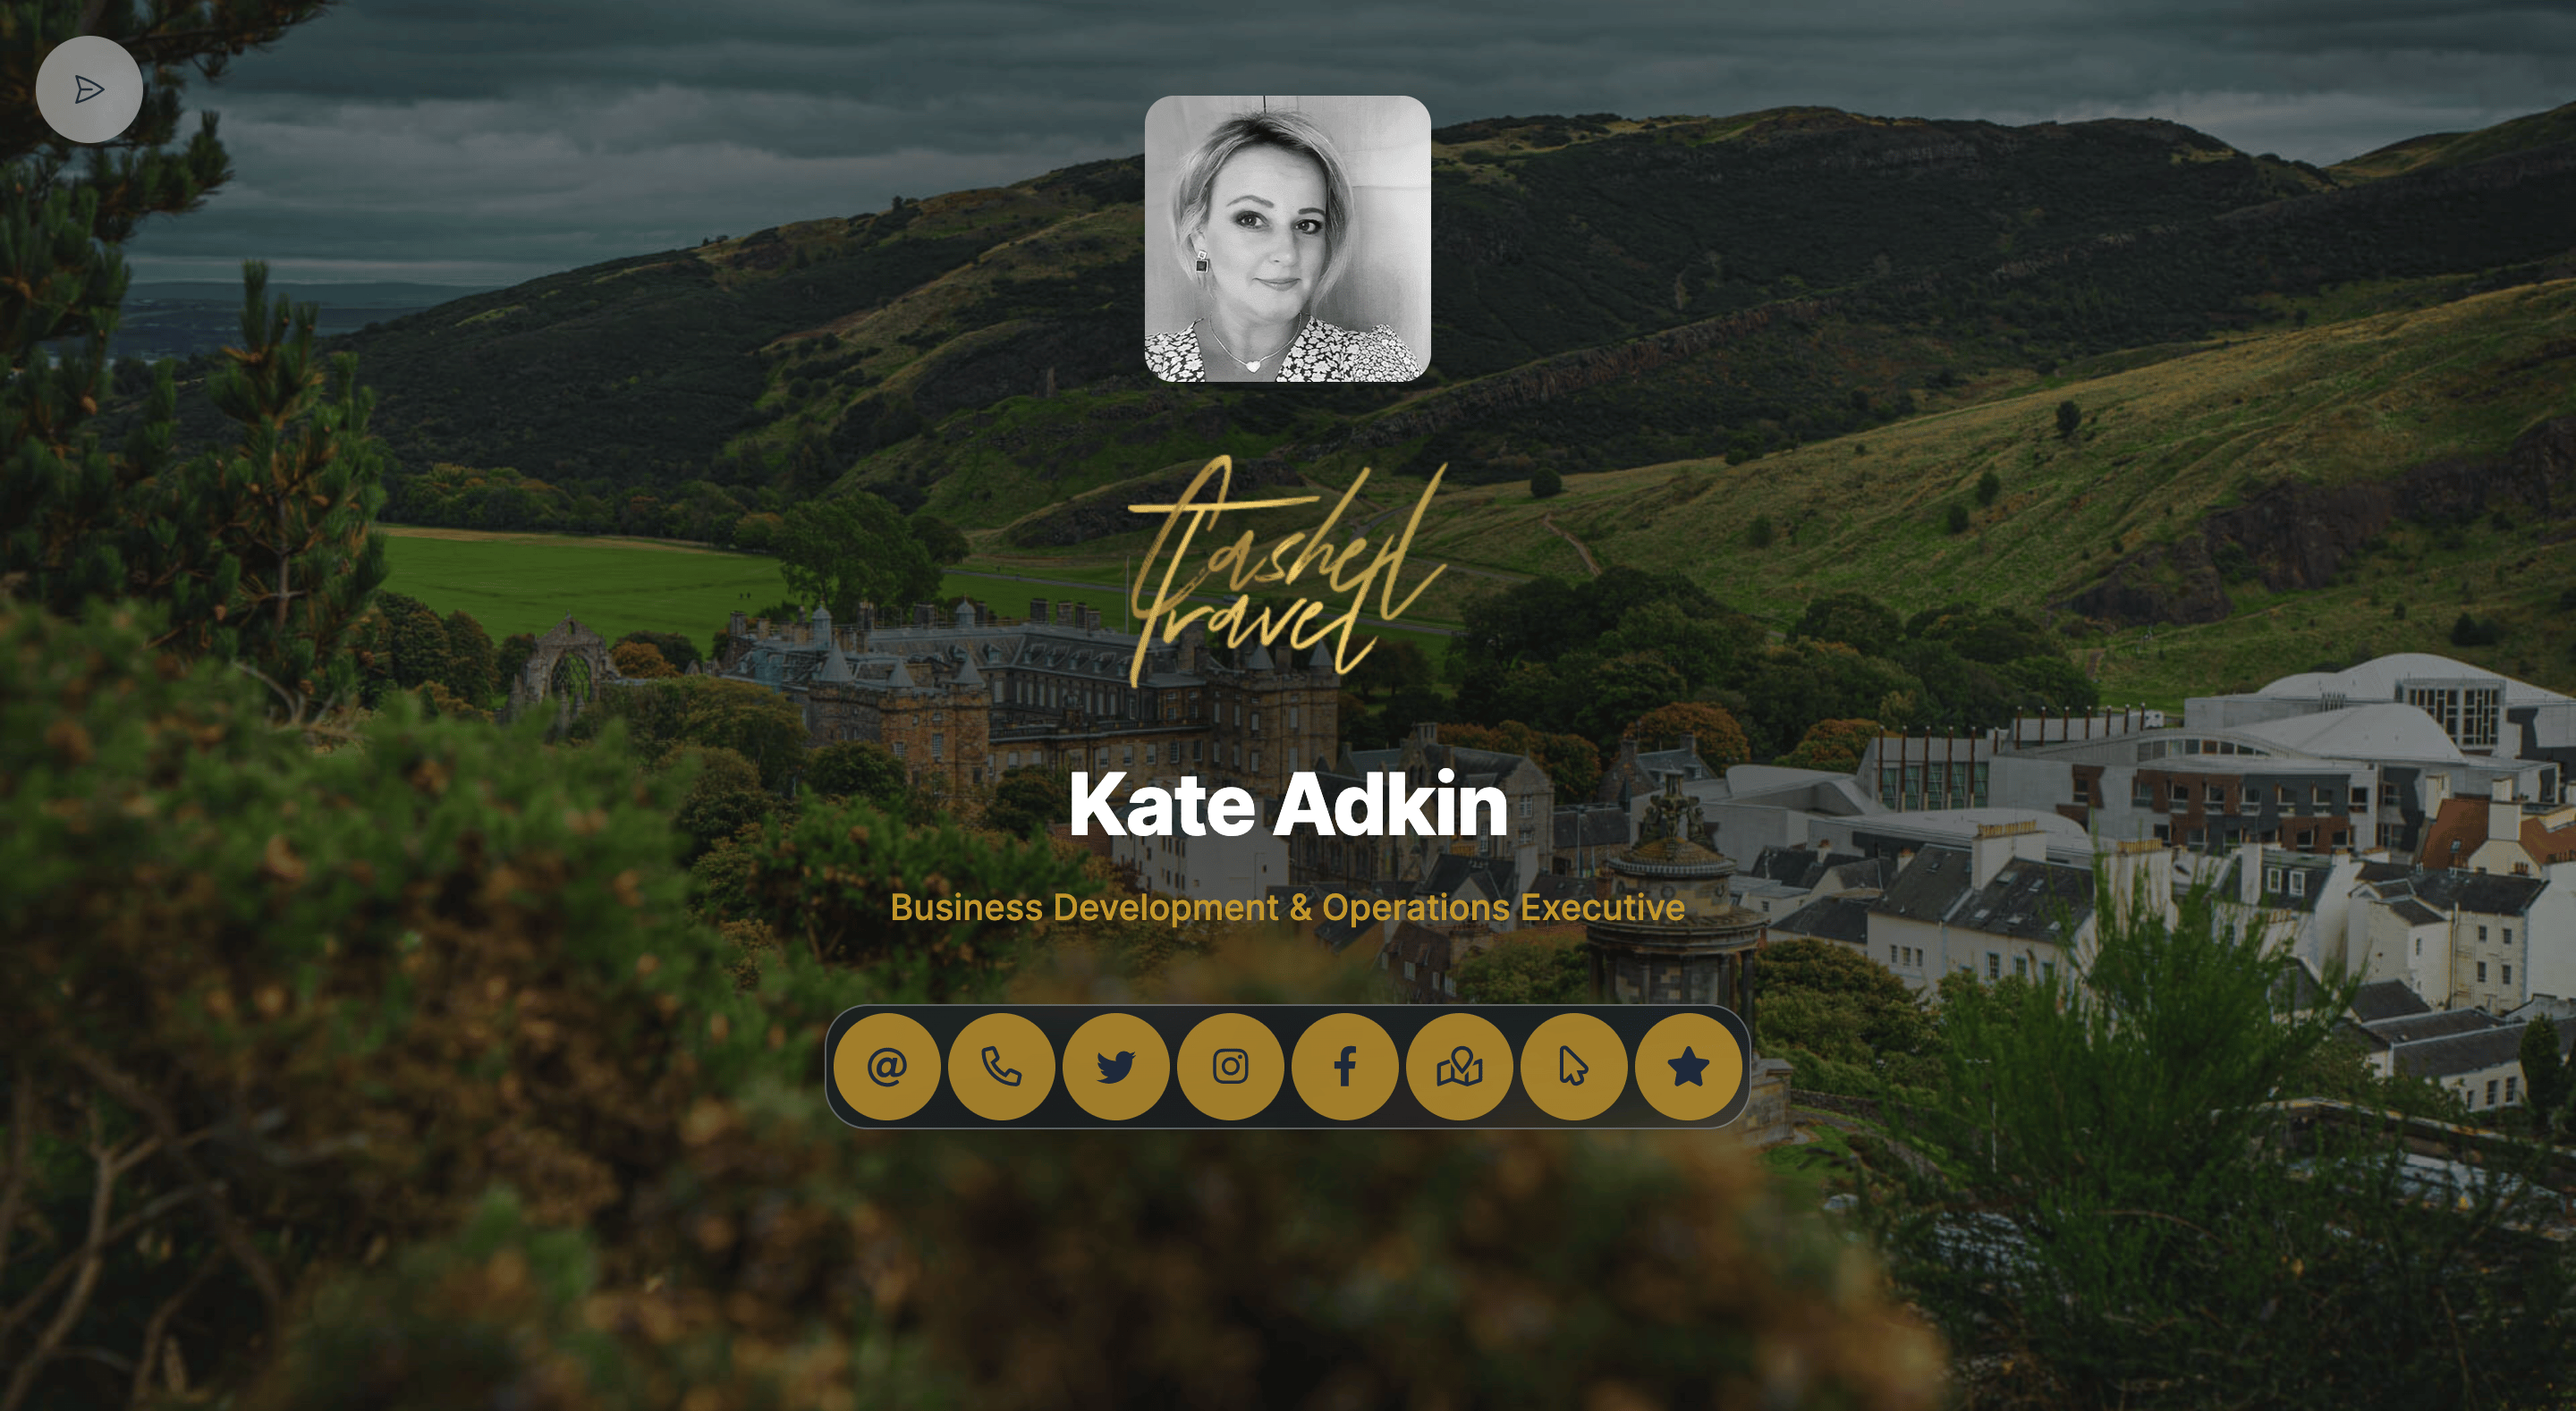 Digital business card for Kate Adkin at Cashel Travel